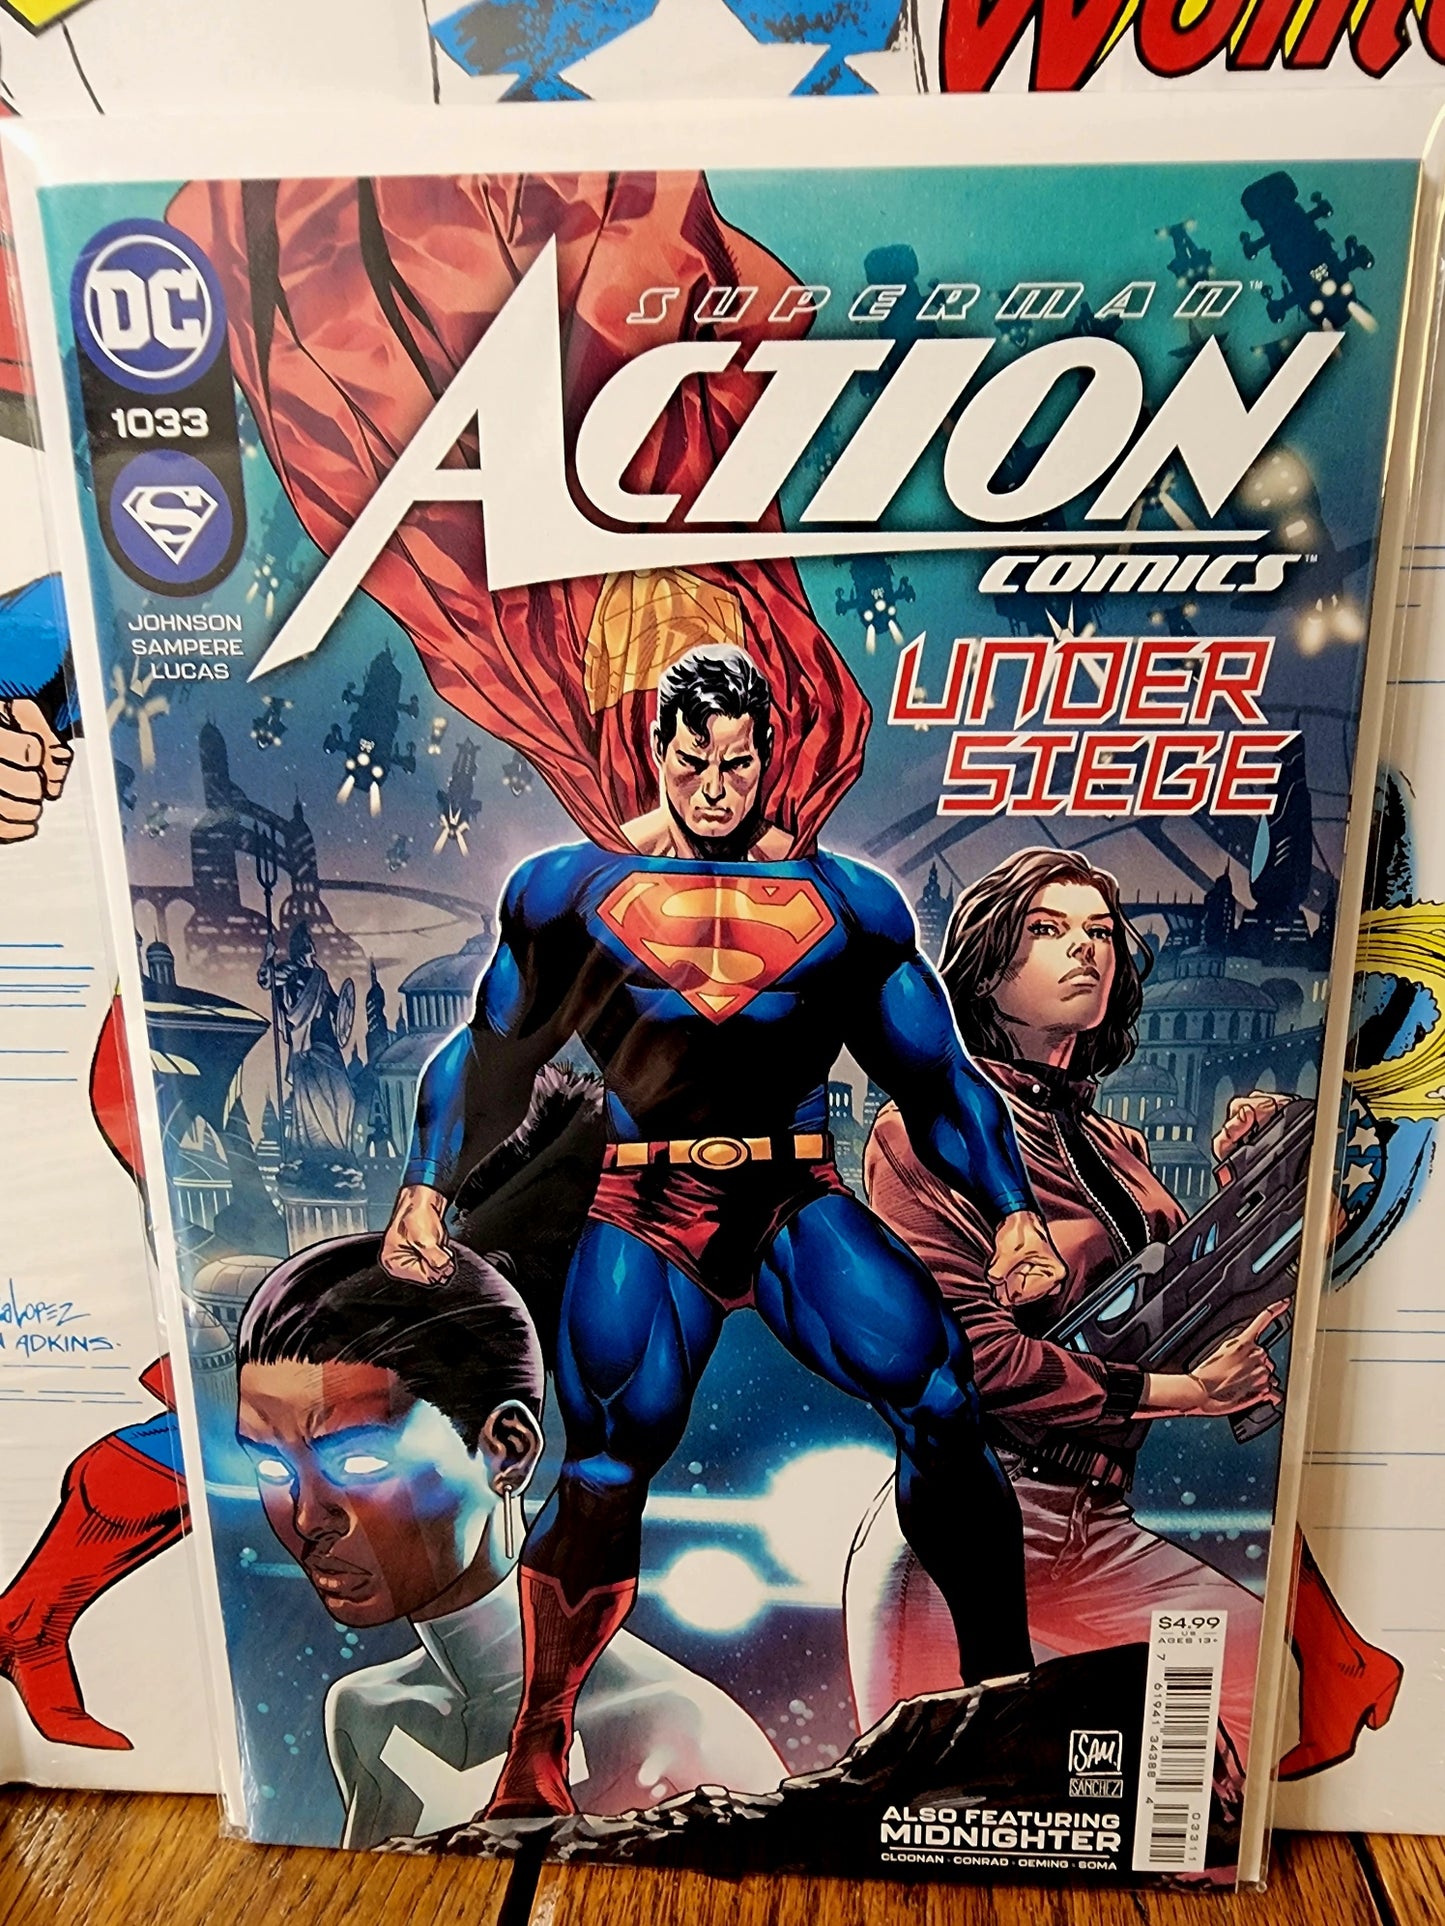 Action Comics #1033 (NM)